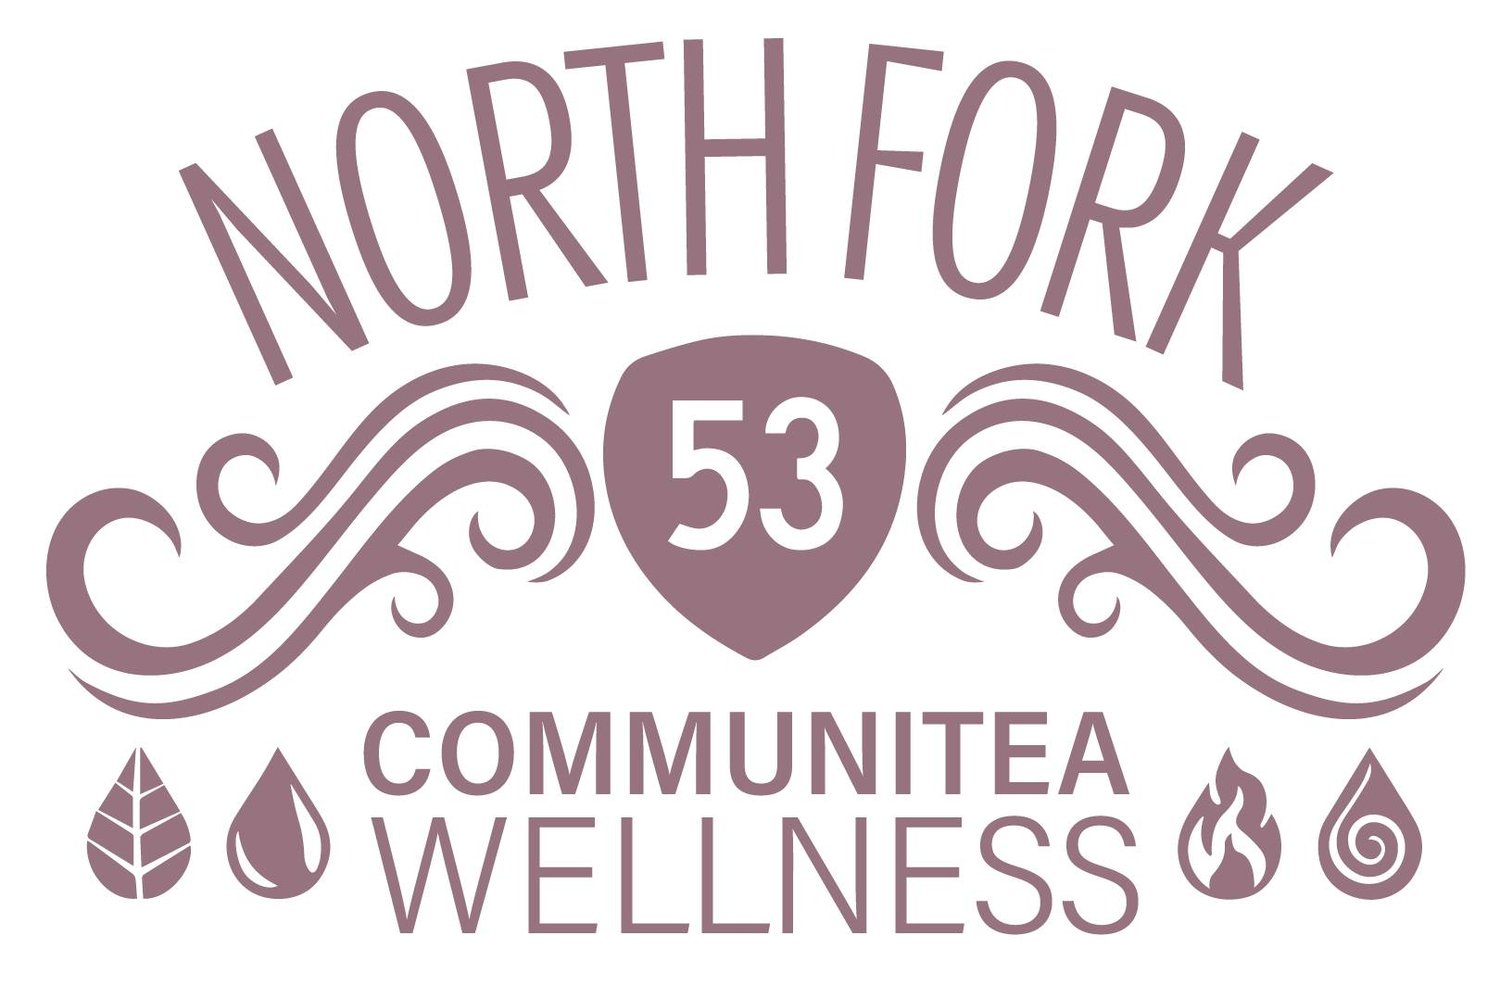 North Fork 53 Communitea 